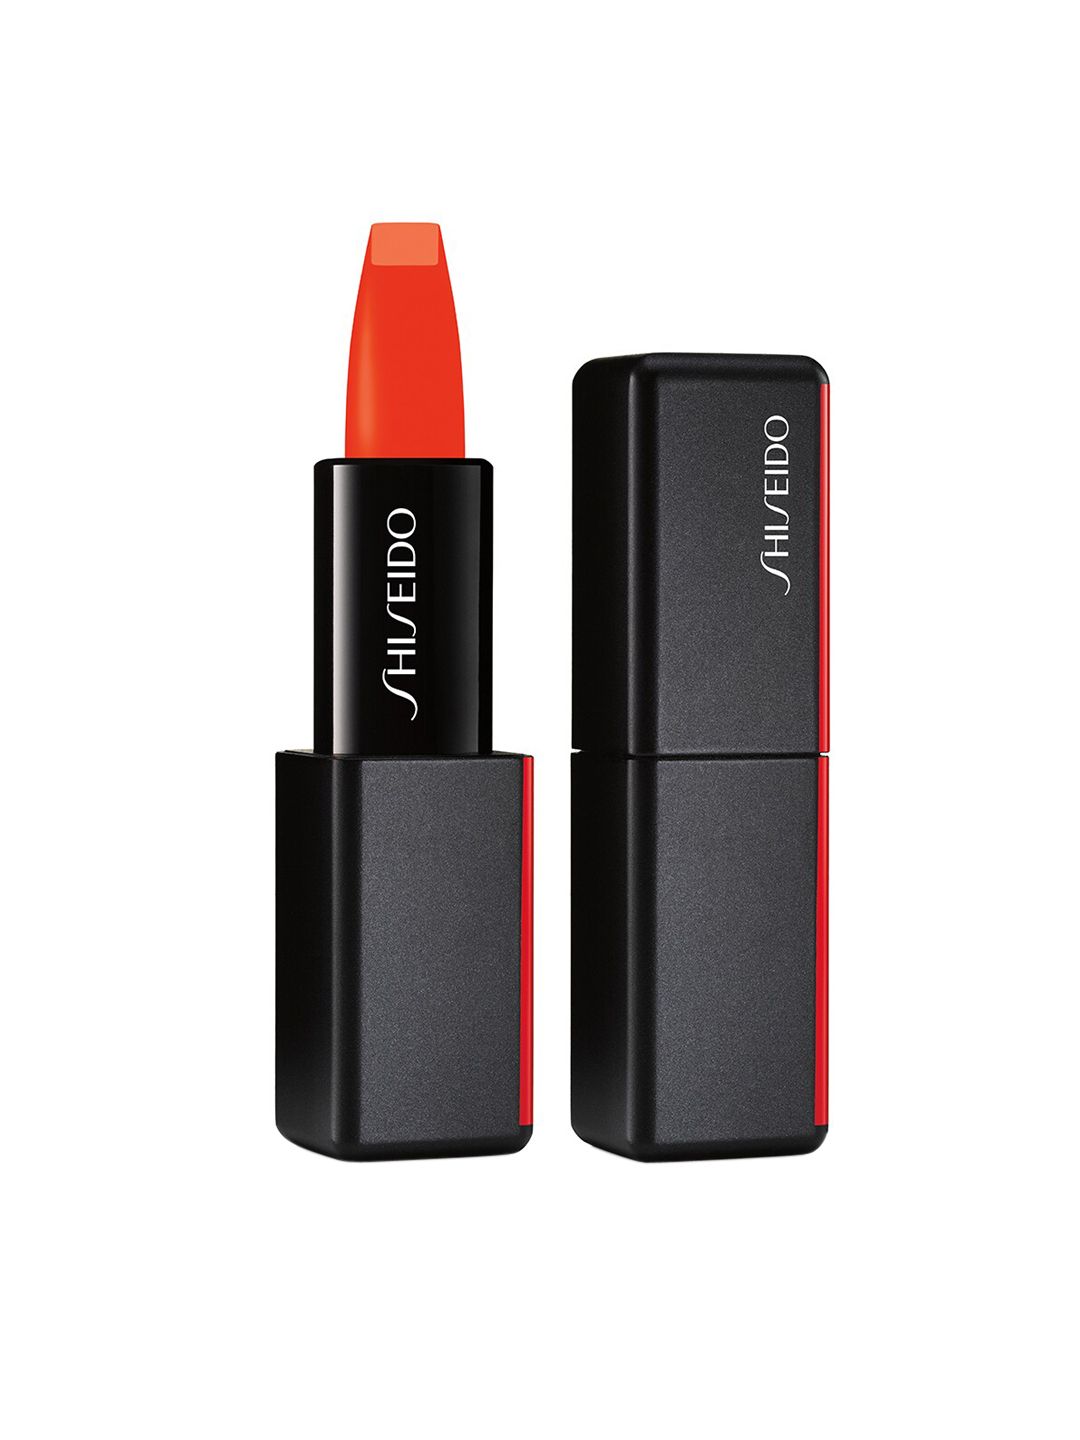 SHISEIDO Modermatte Powder Lipstick Torch Song 528 gm Price in India